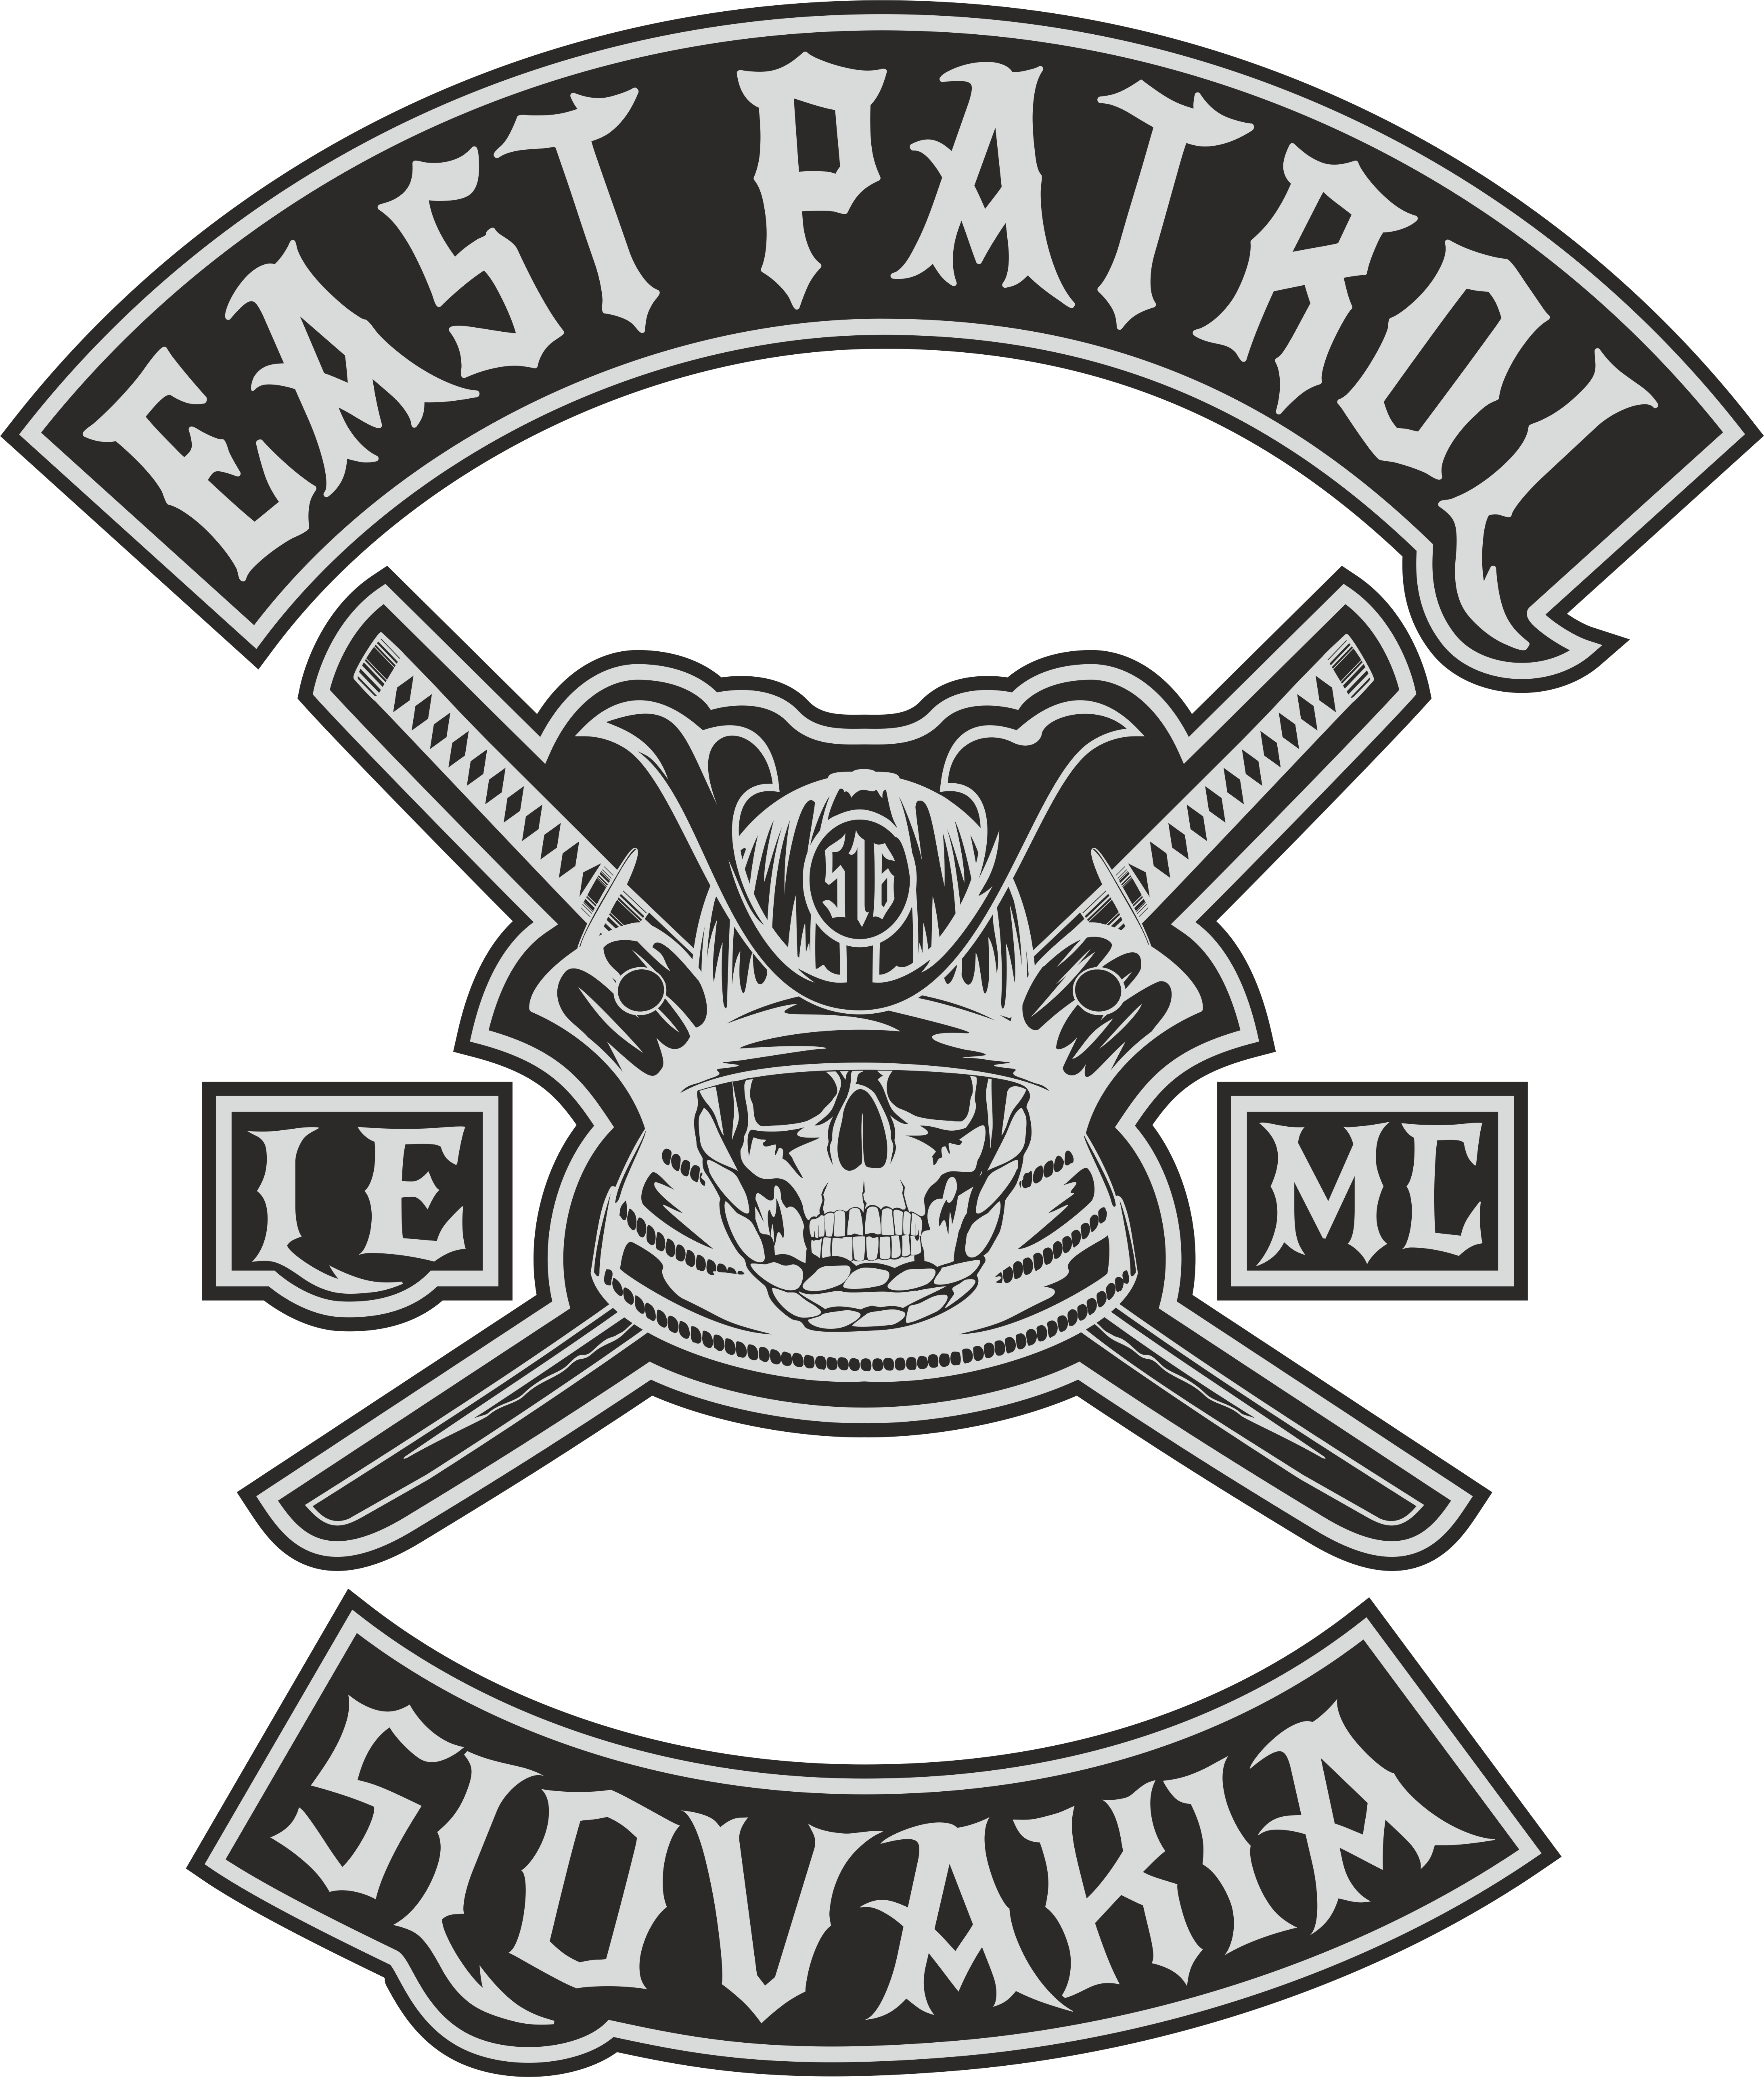 East Patrol LE MC